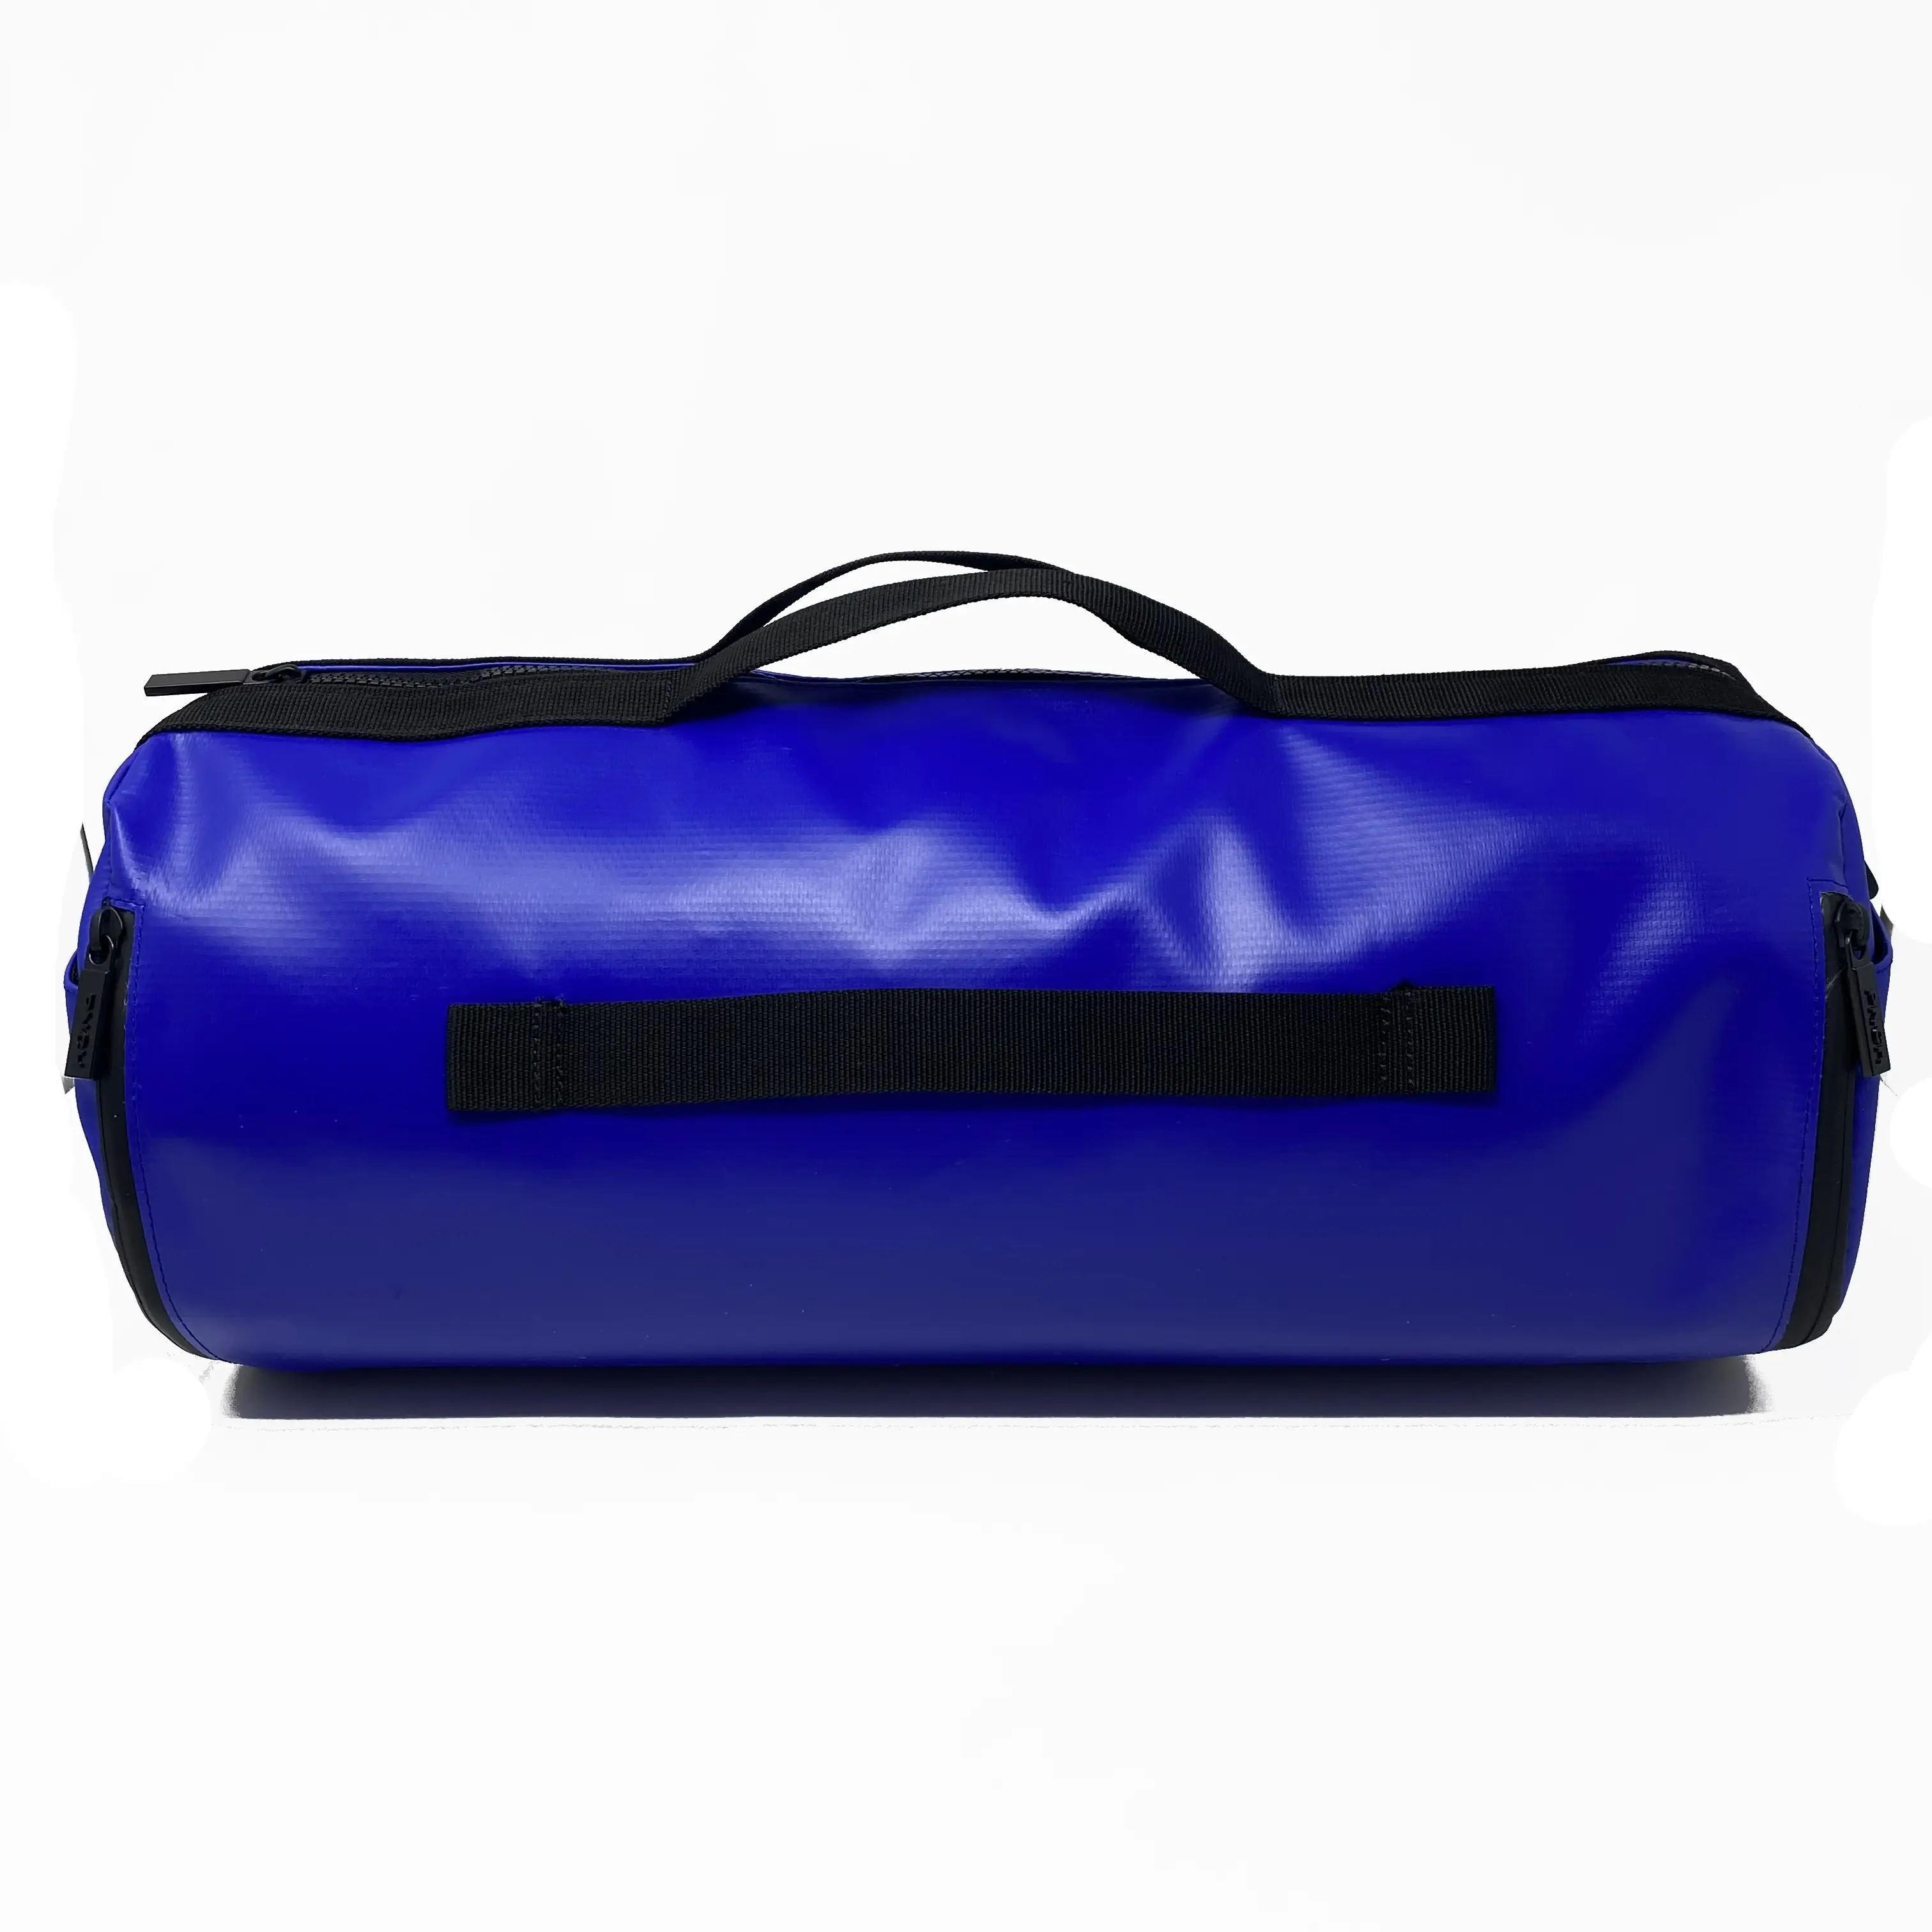 Bree PNCH 798 sportsbag - space blue